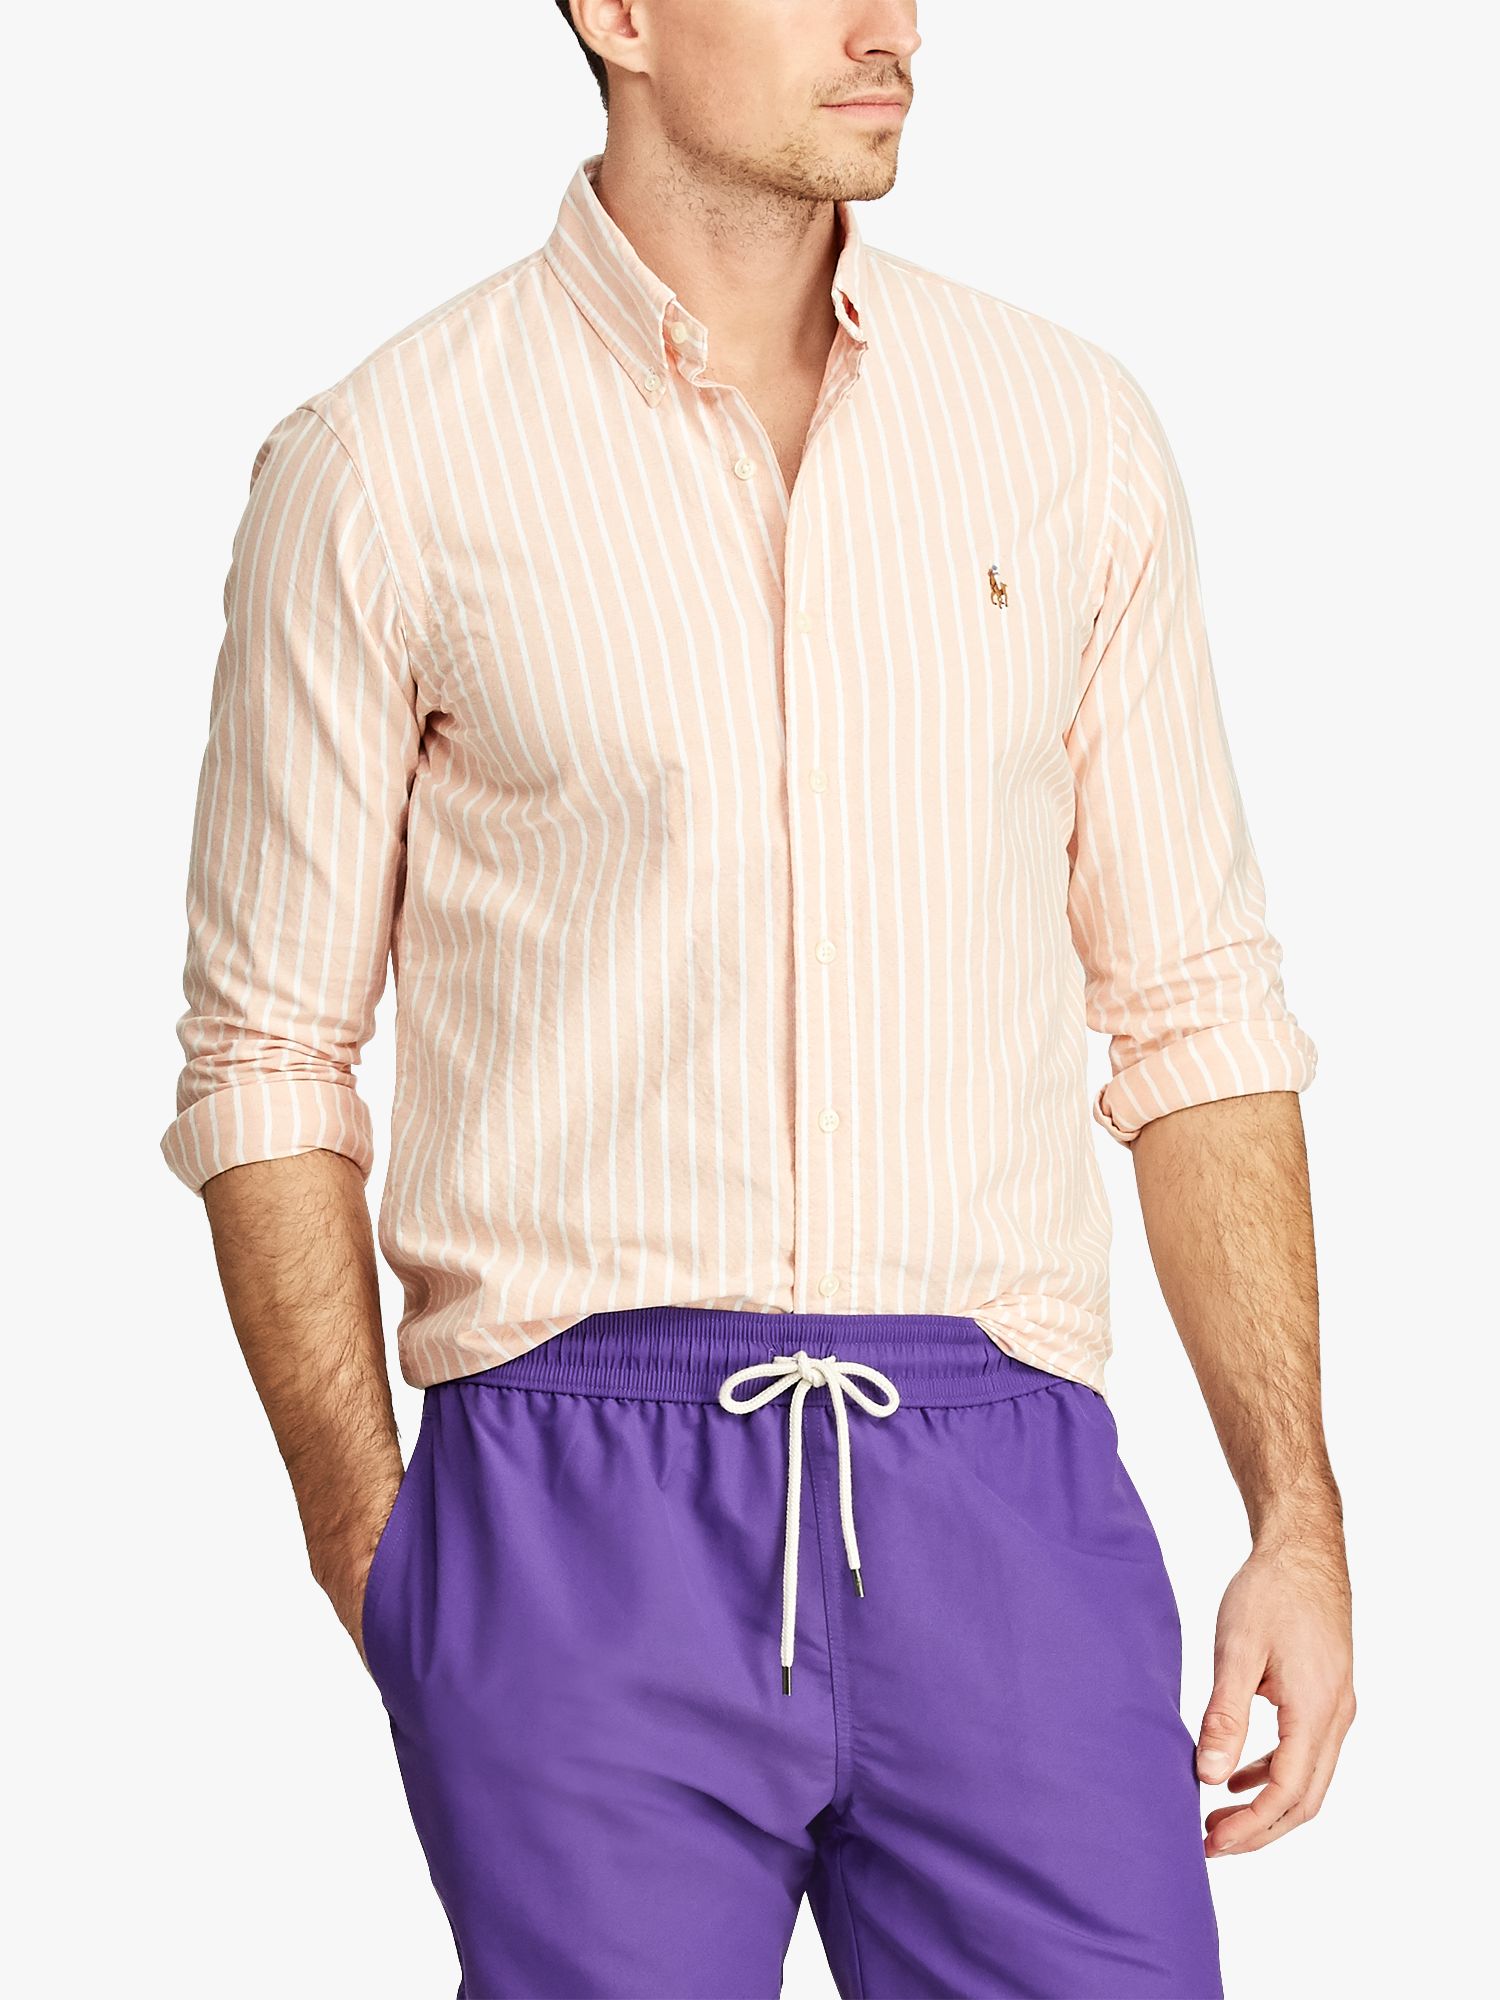 Polo Ralph Lauren Slim Fit Striped Oxford Shirt, Tangerine/White